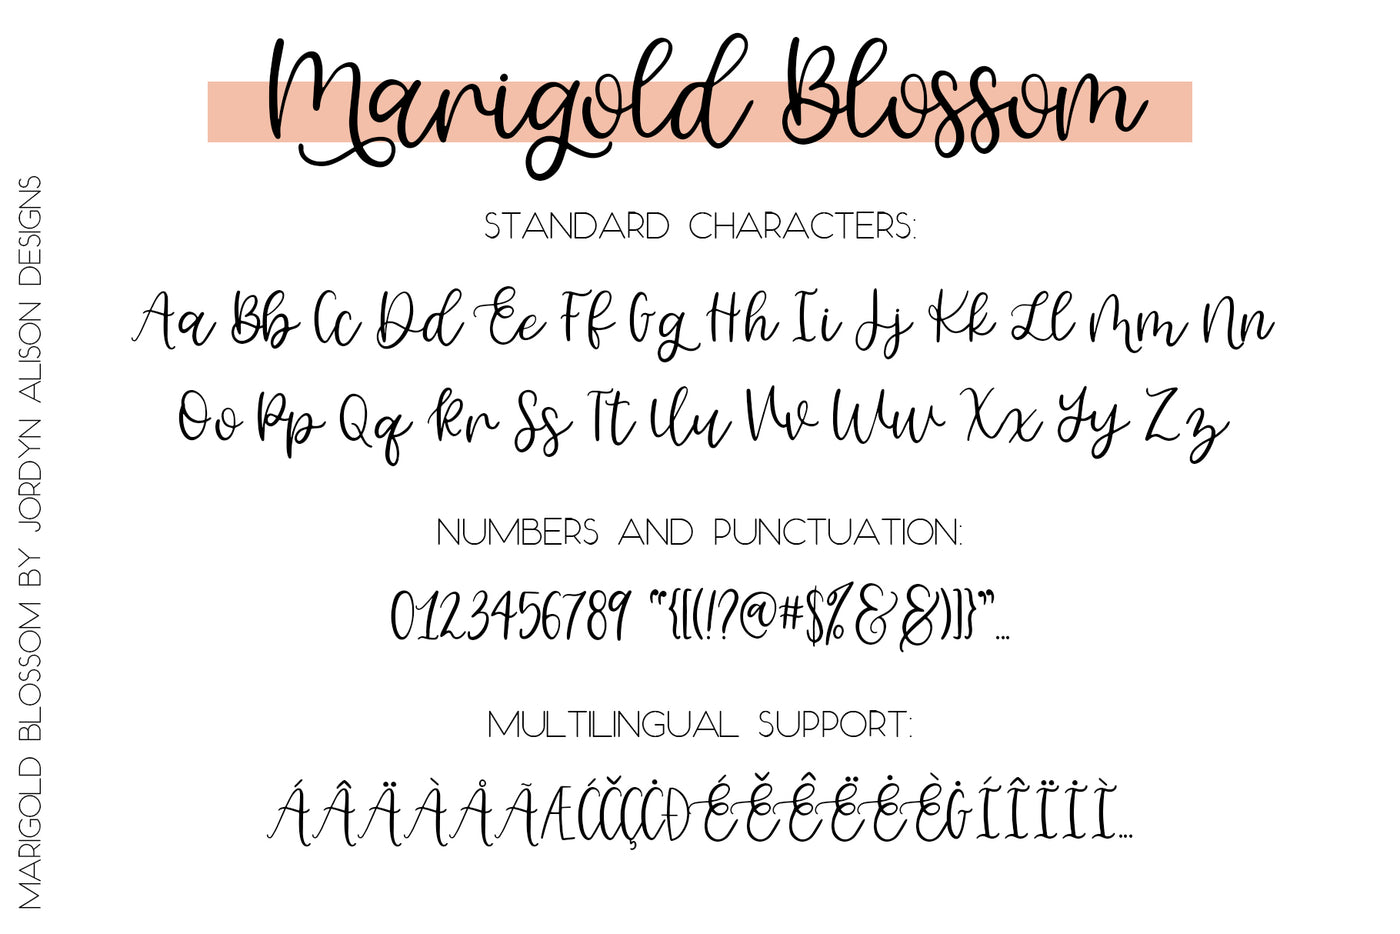 Marigold Blossom Font - JordynAlisonDesigns